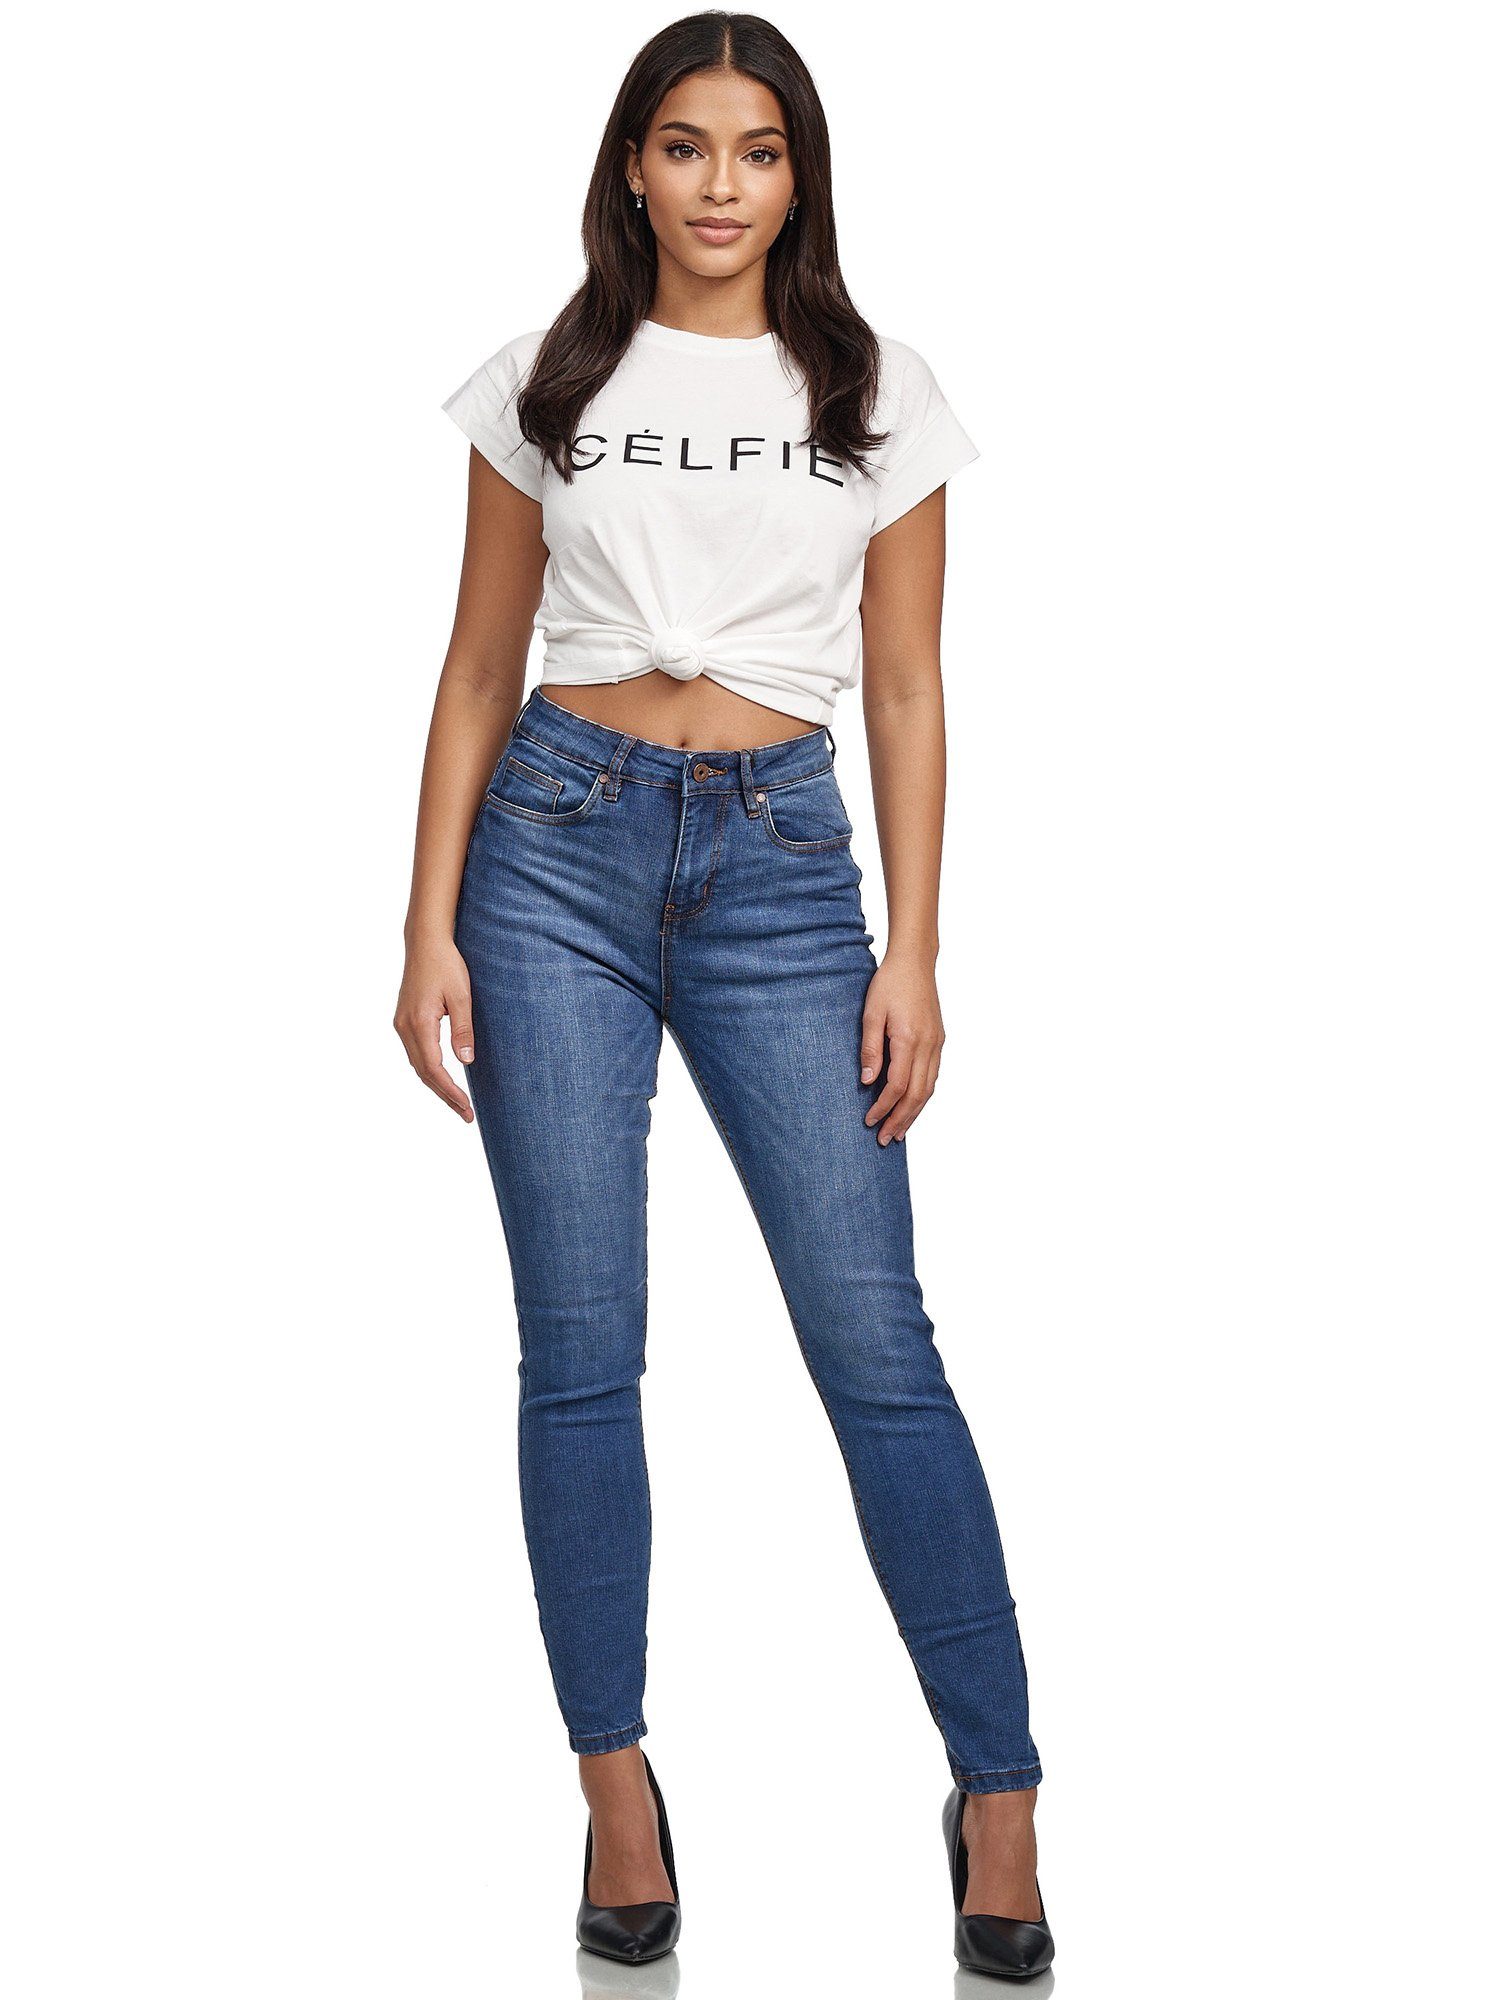 Damen Jeanshose F101 High-waist-Jeans Skinny Tazzio Fit blau